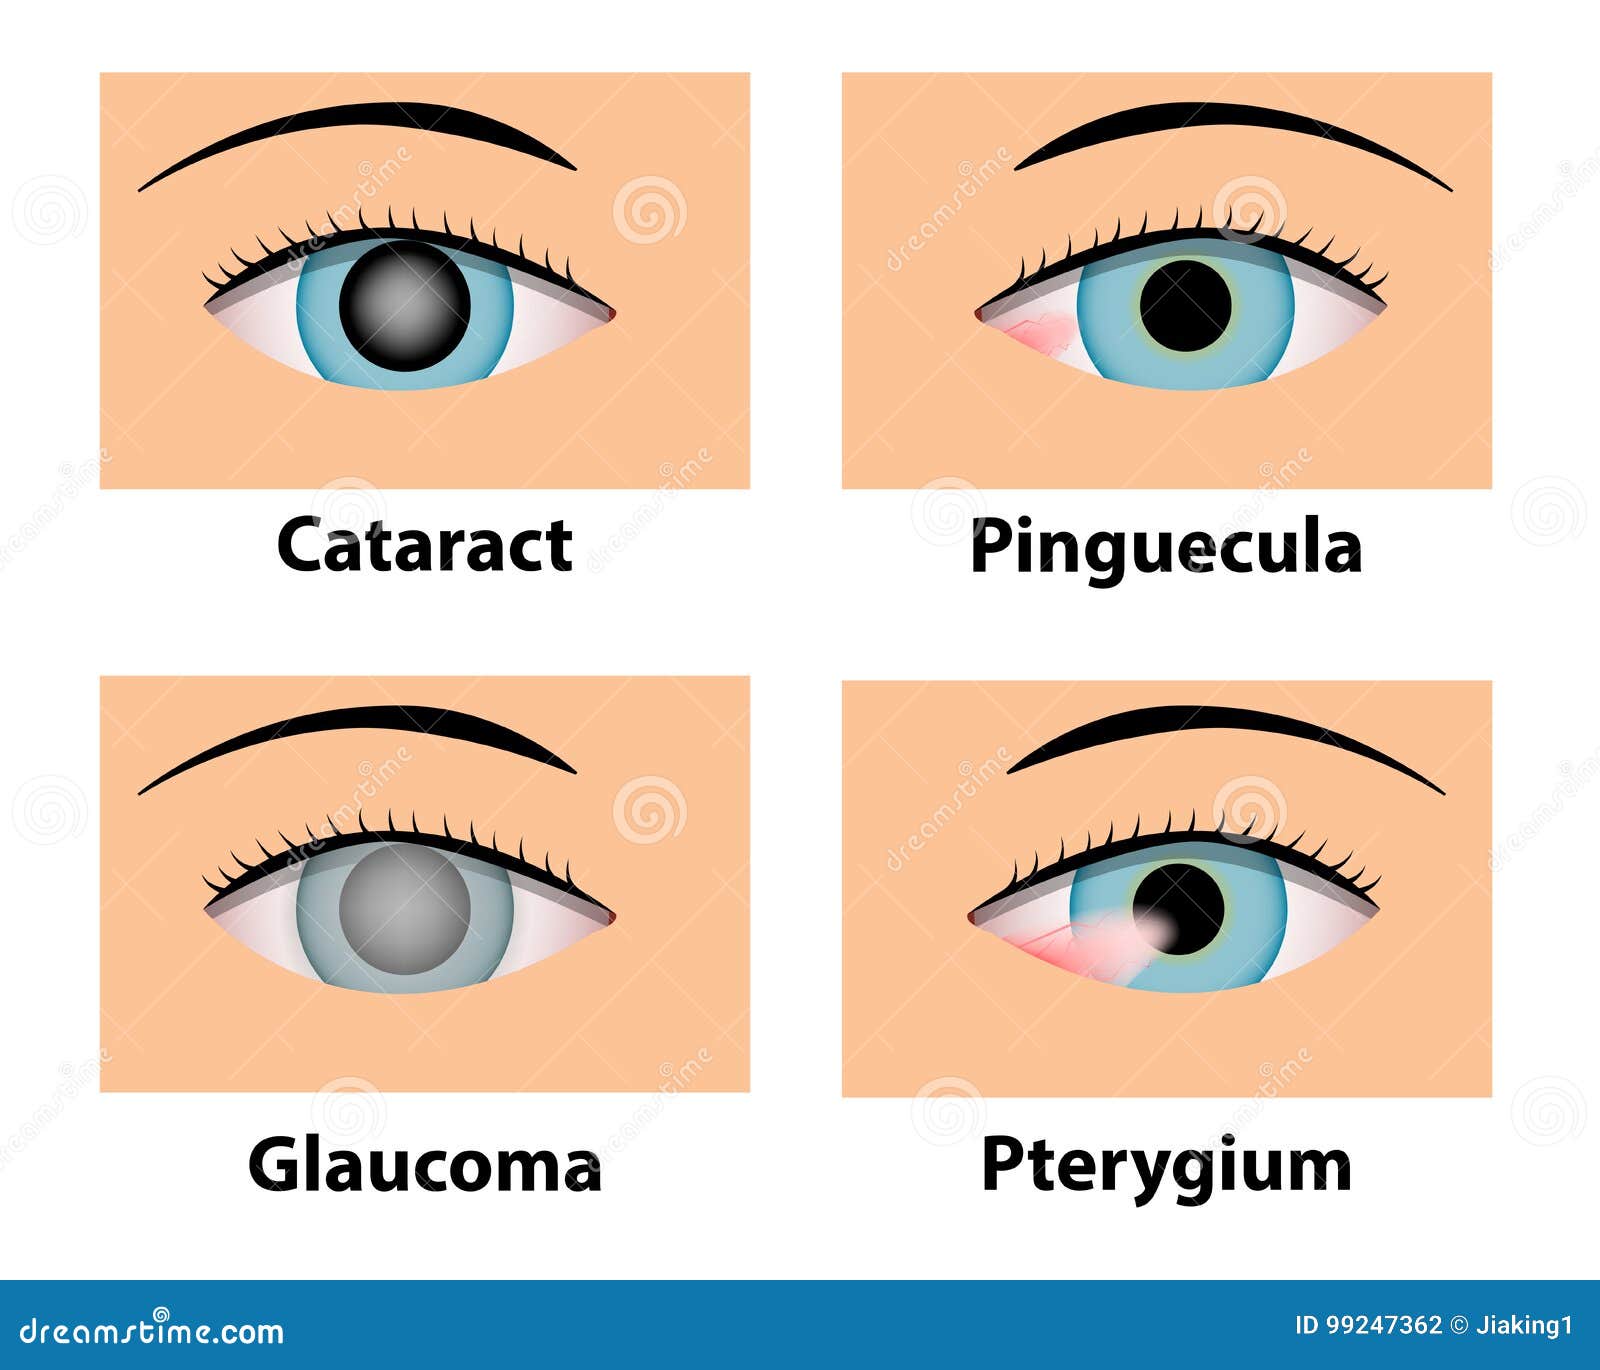 cataract, pinguecula, glaucoma and pterygium, eye care